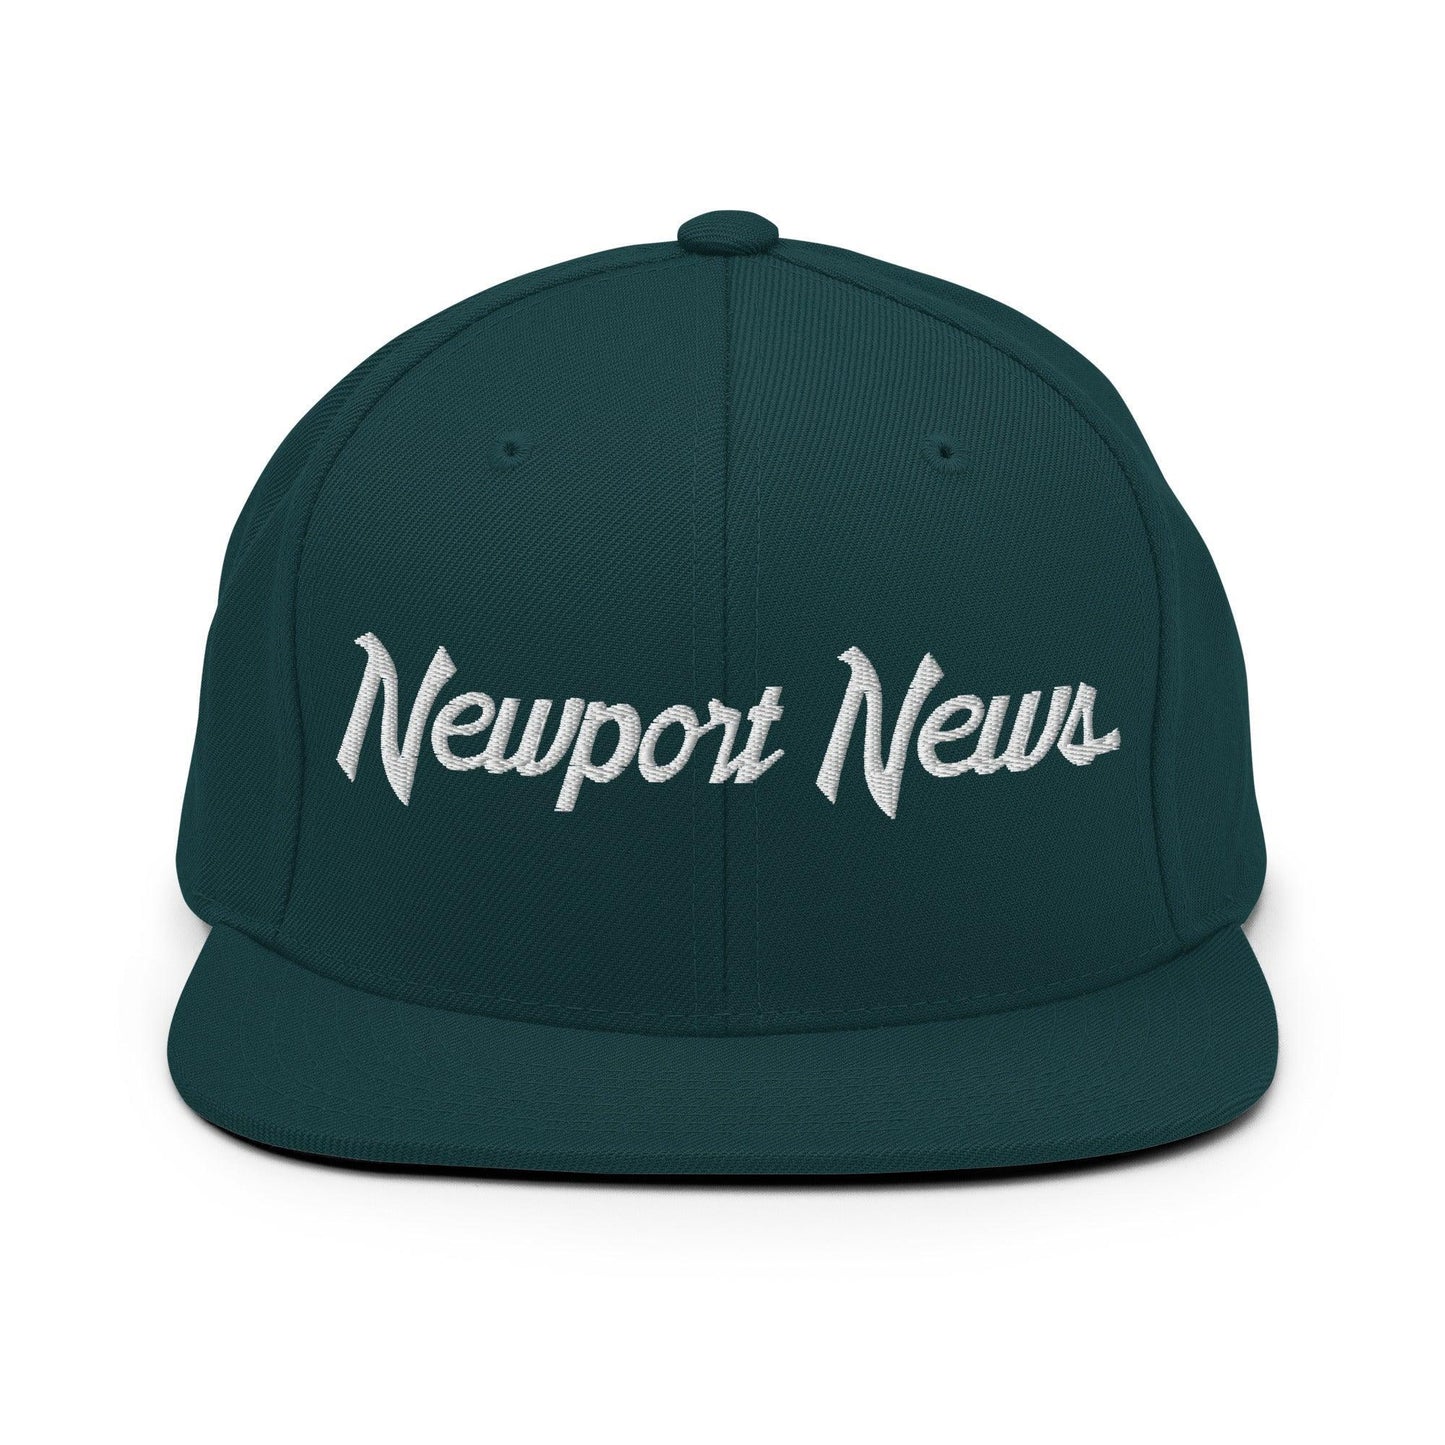 Newport News Script Snapback Hat Spruce